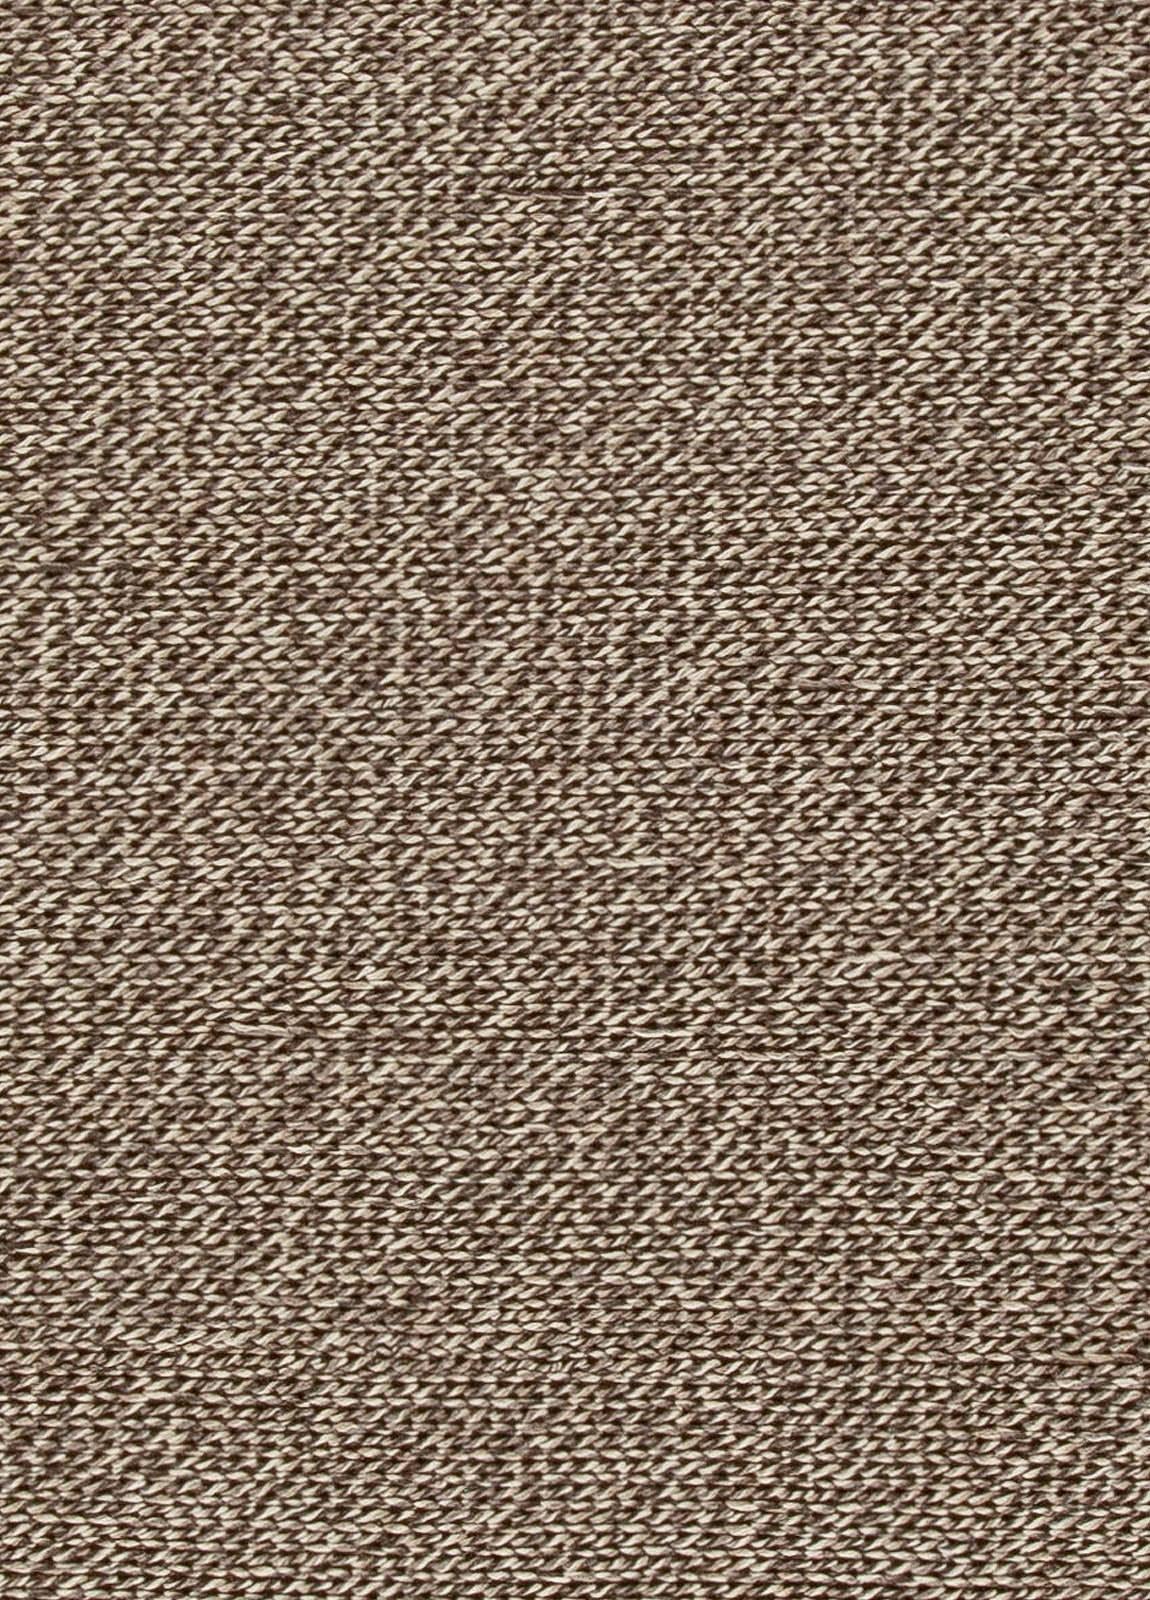 Contemporary smoked loop brown and ivory handmade wool rug by Doris Leslie Blau
Size: 13'7